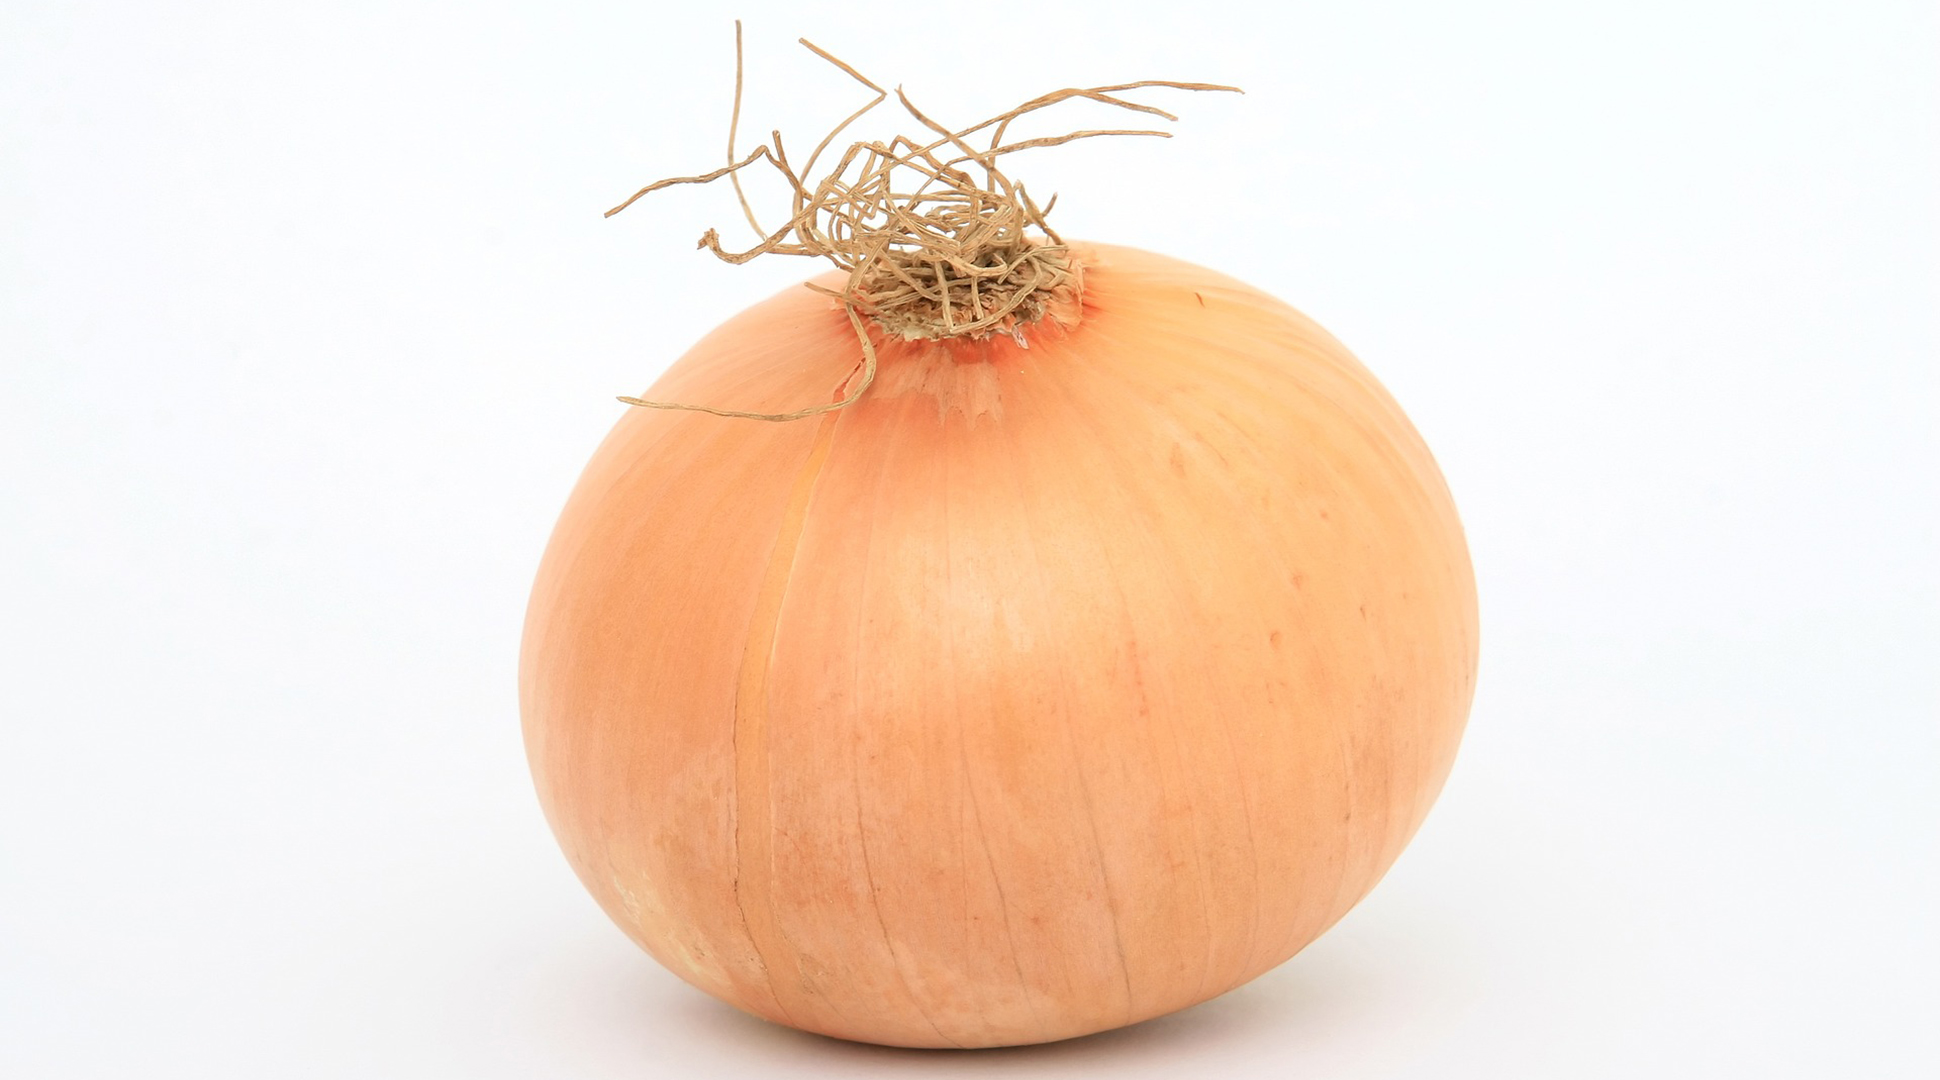 Food safety alert: Thomson onions